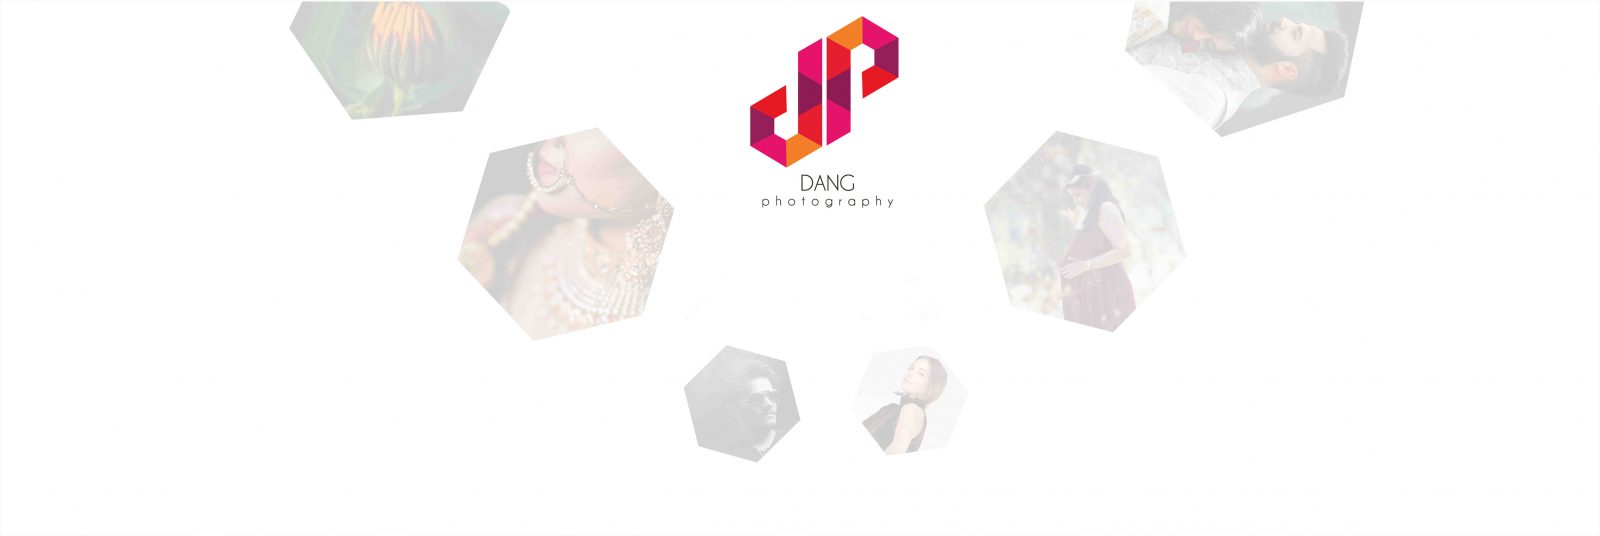 Dang photography|Banquet Halls|Event Services